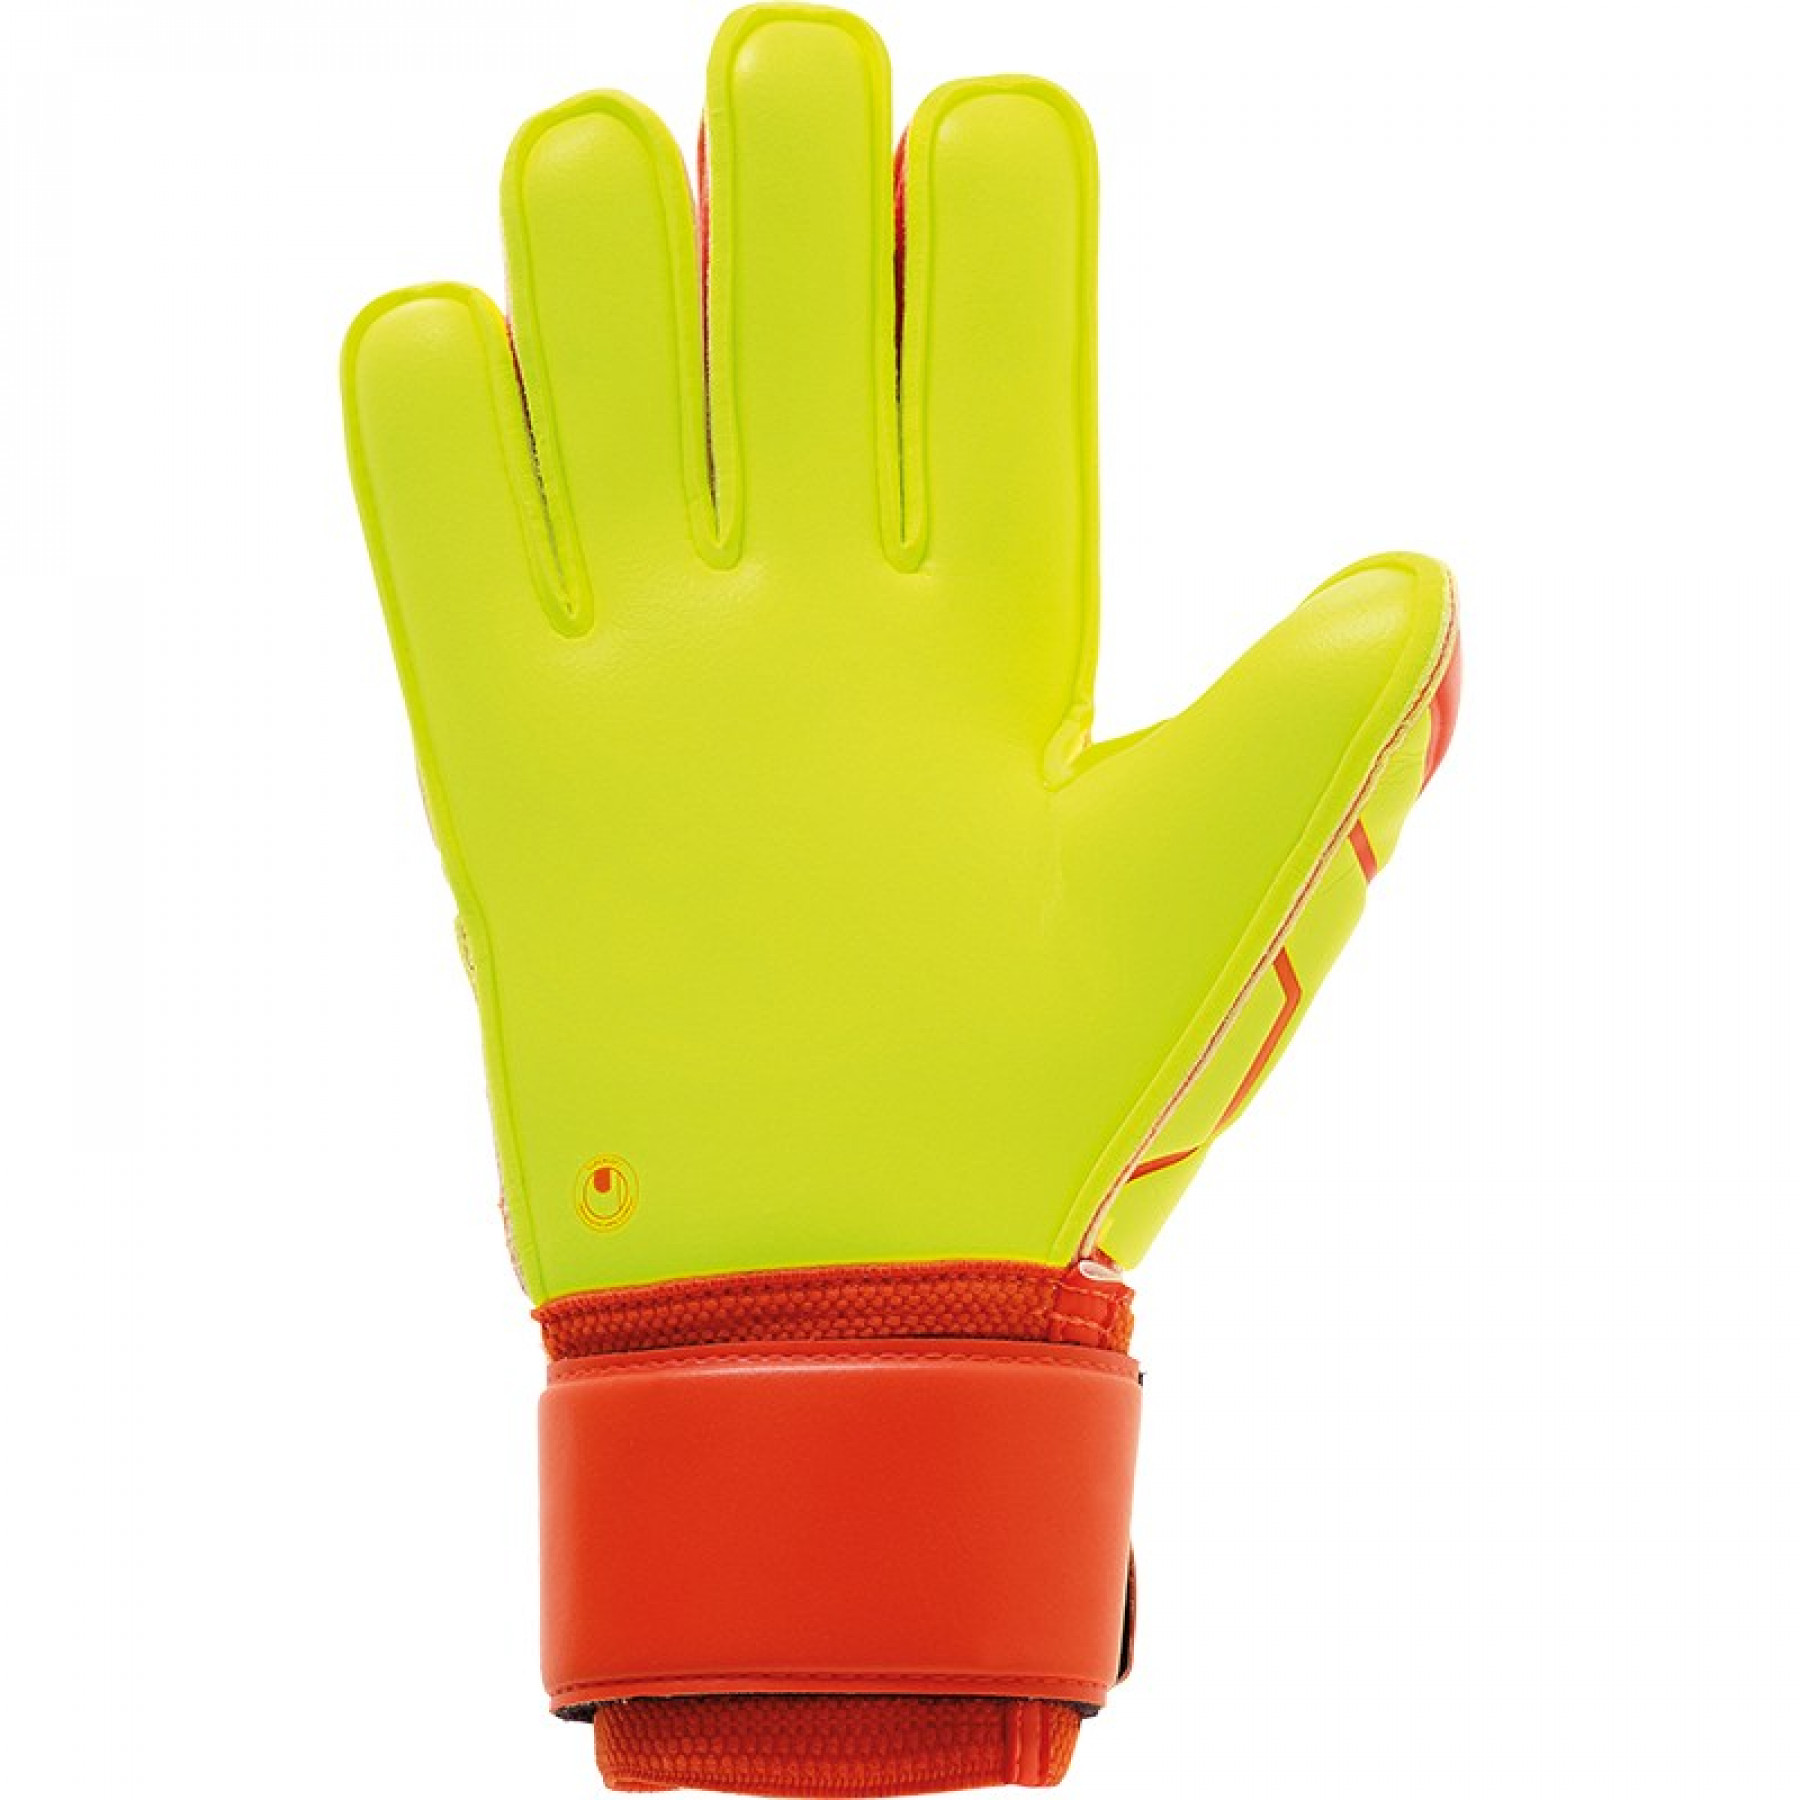 Goalkeeper gloves Ulhsport Dynamic Impulse Supersoft